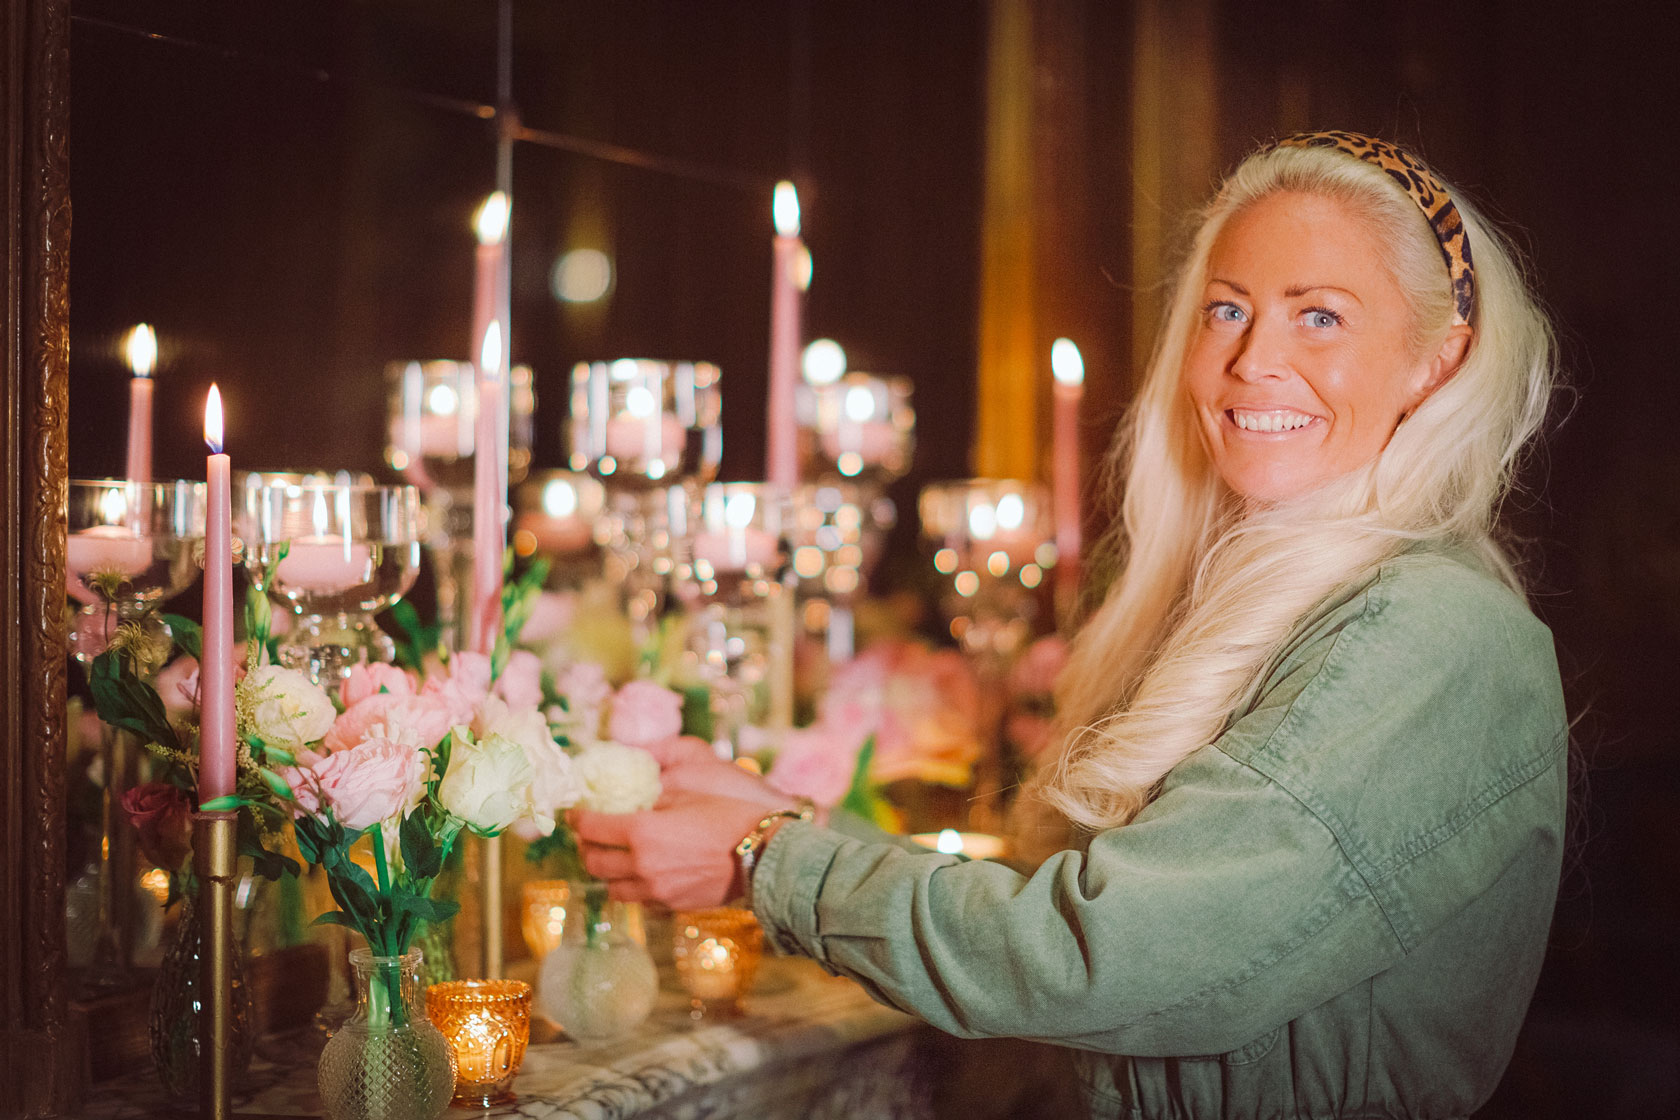 experienced florist Amie Bone arranging flowers on a mantelpiece wedding feature